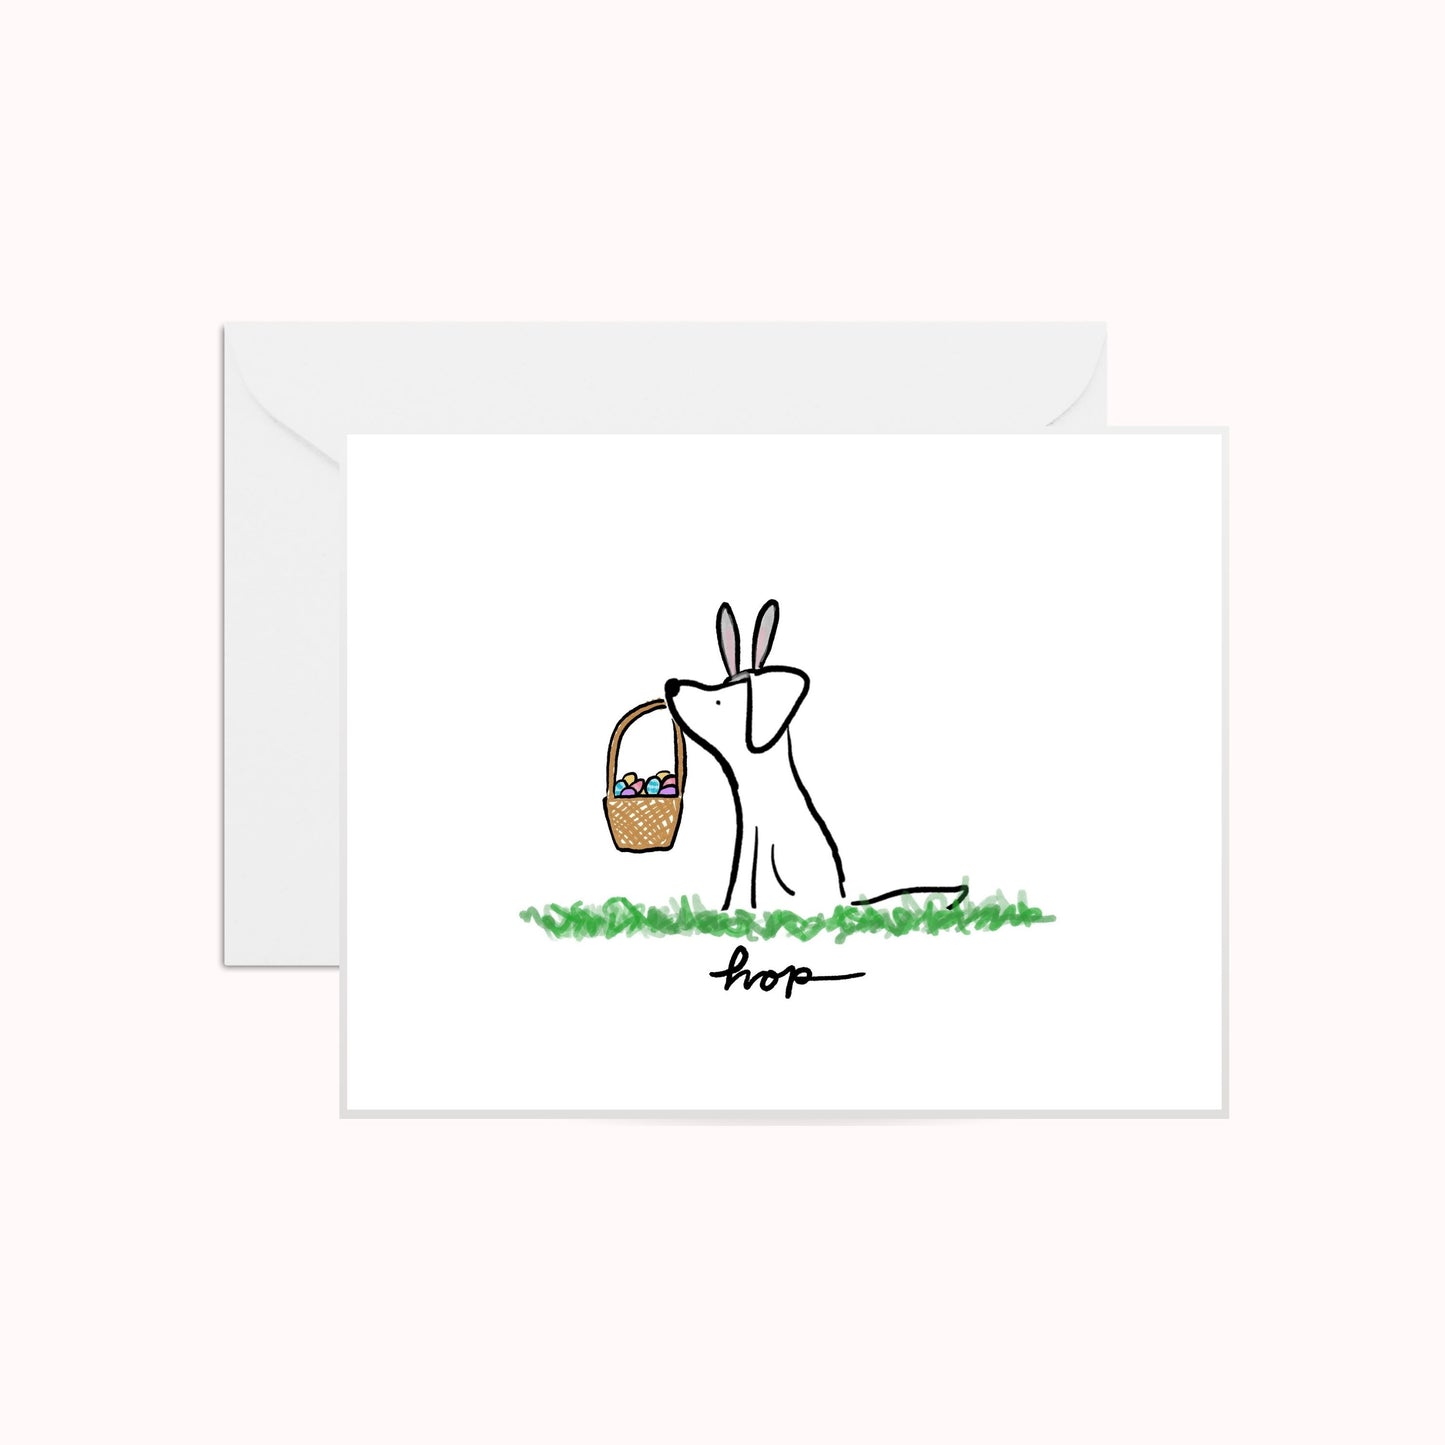 Hop Dog Greeting Card